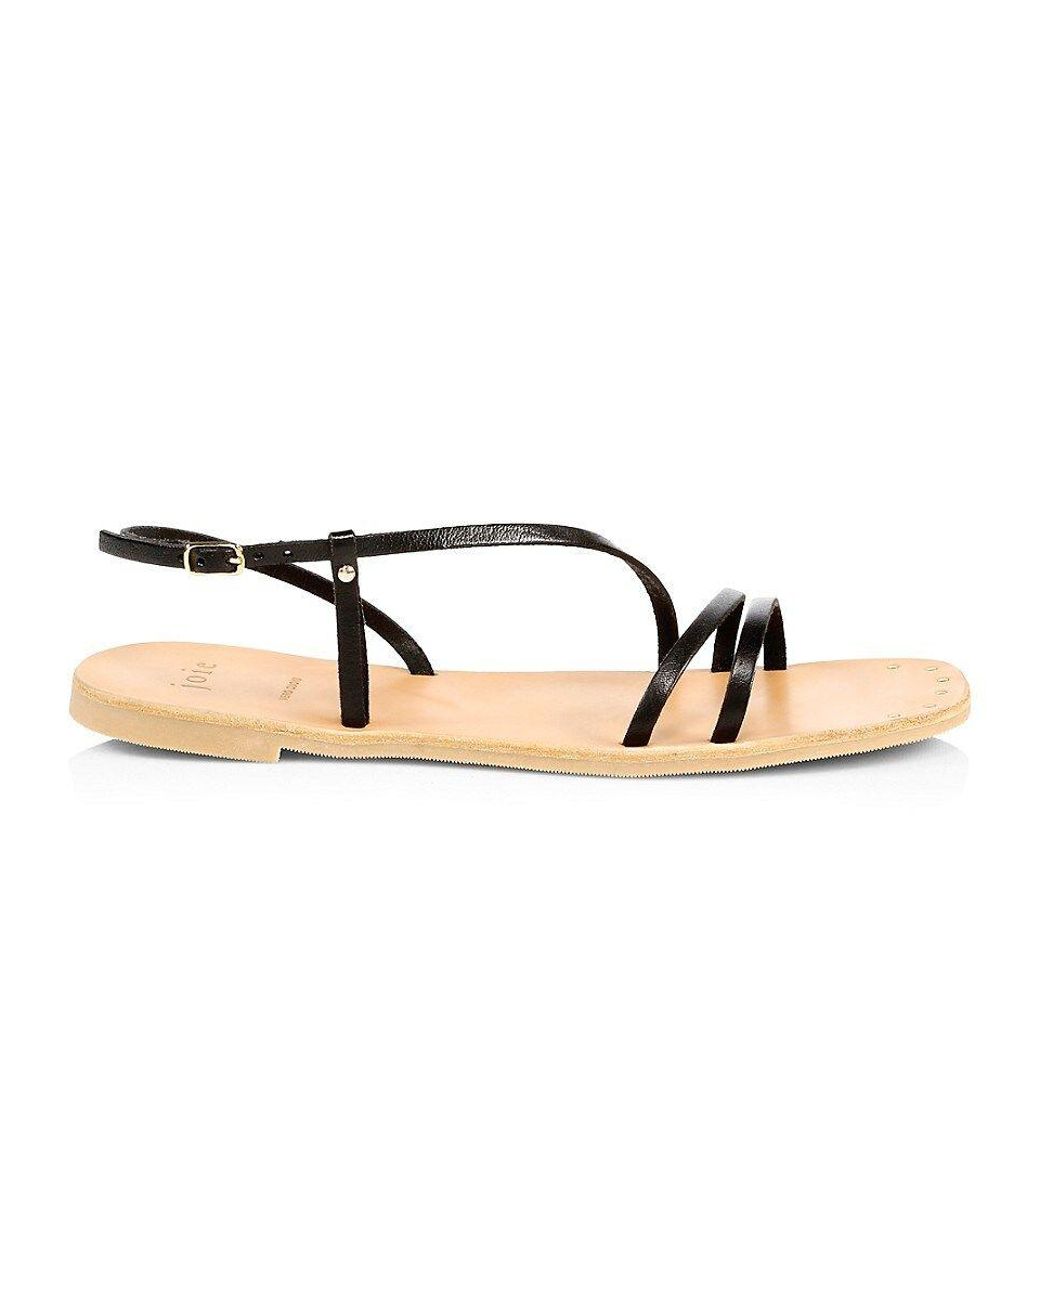 Joie Baja Flat Leather Slingback Sandals in Metallic | Lyst